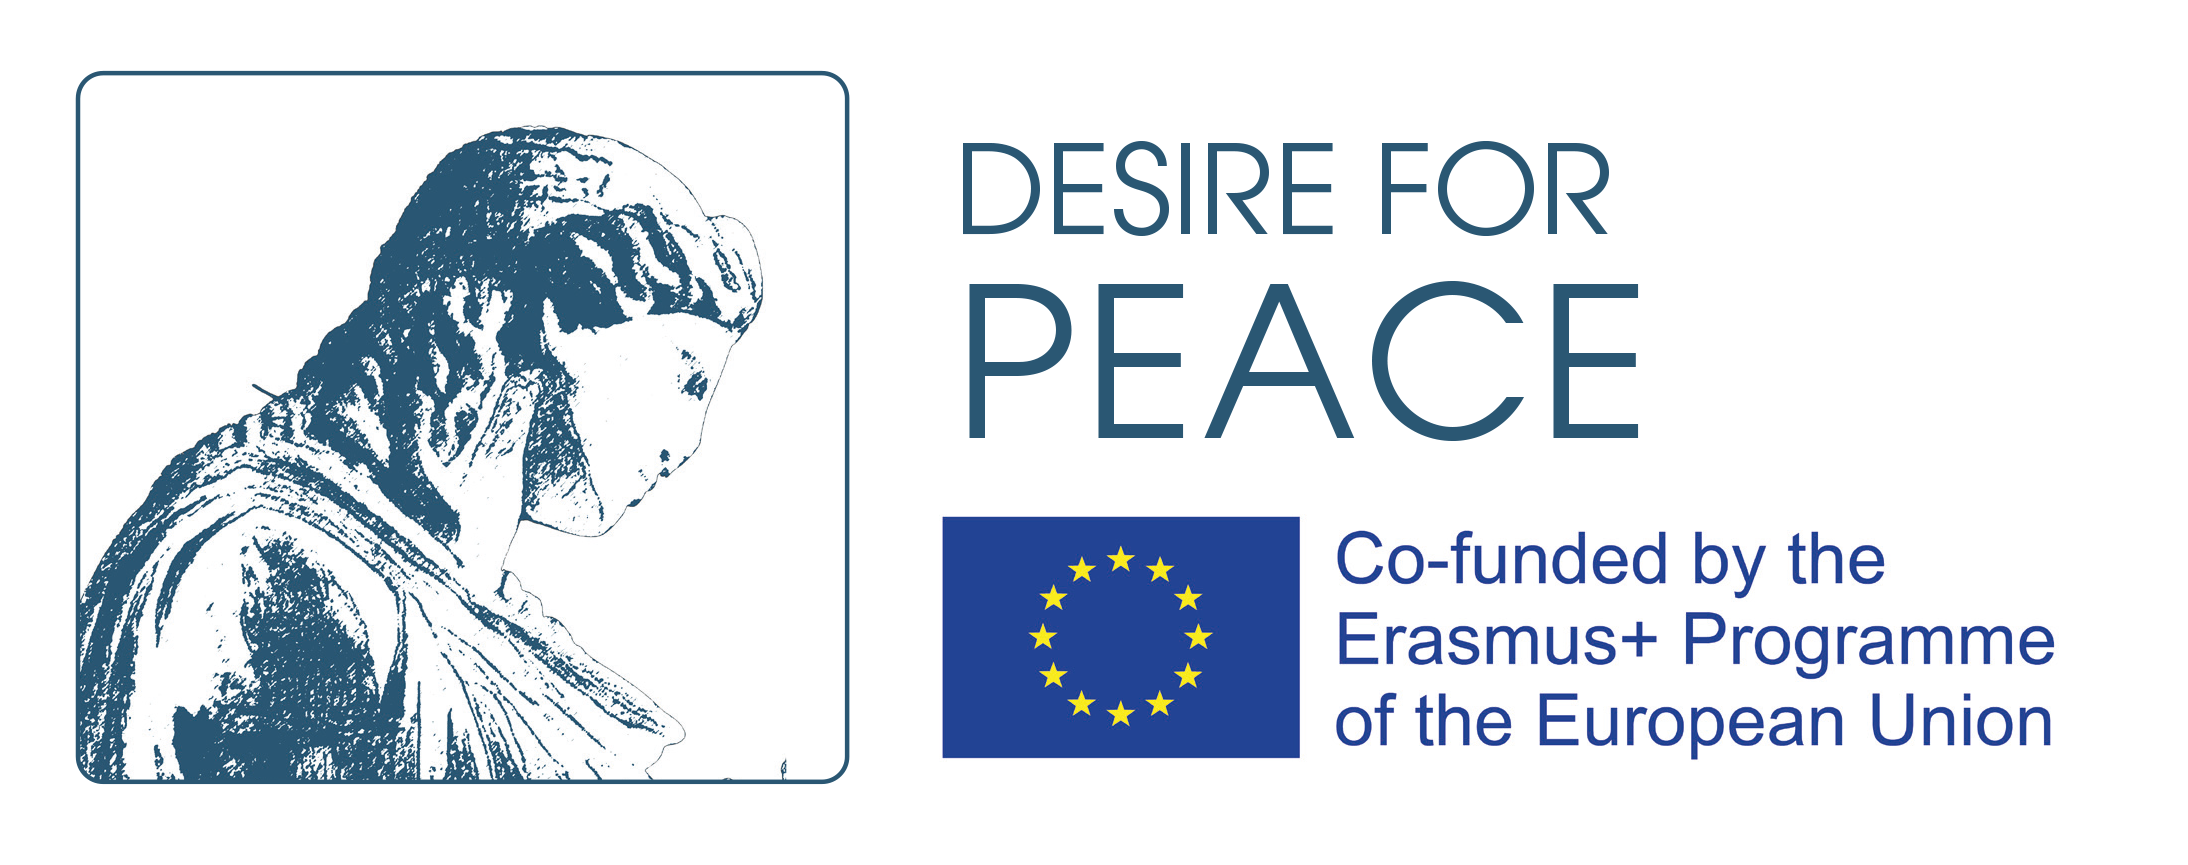 Desire for peace